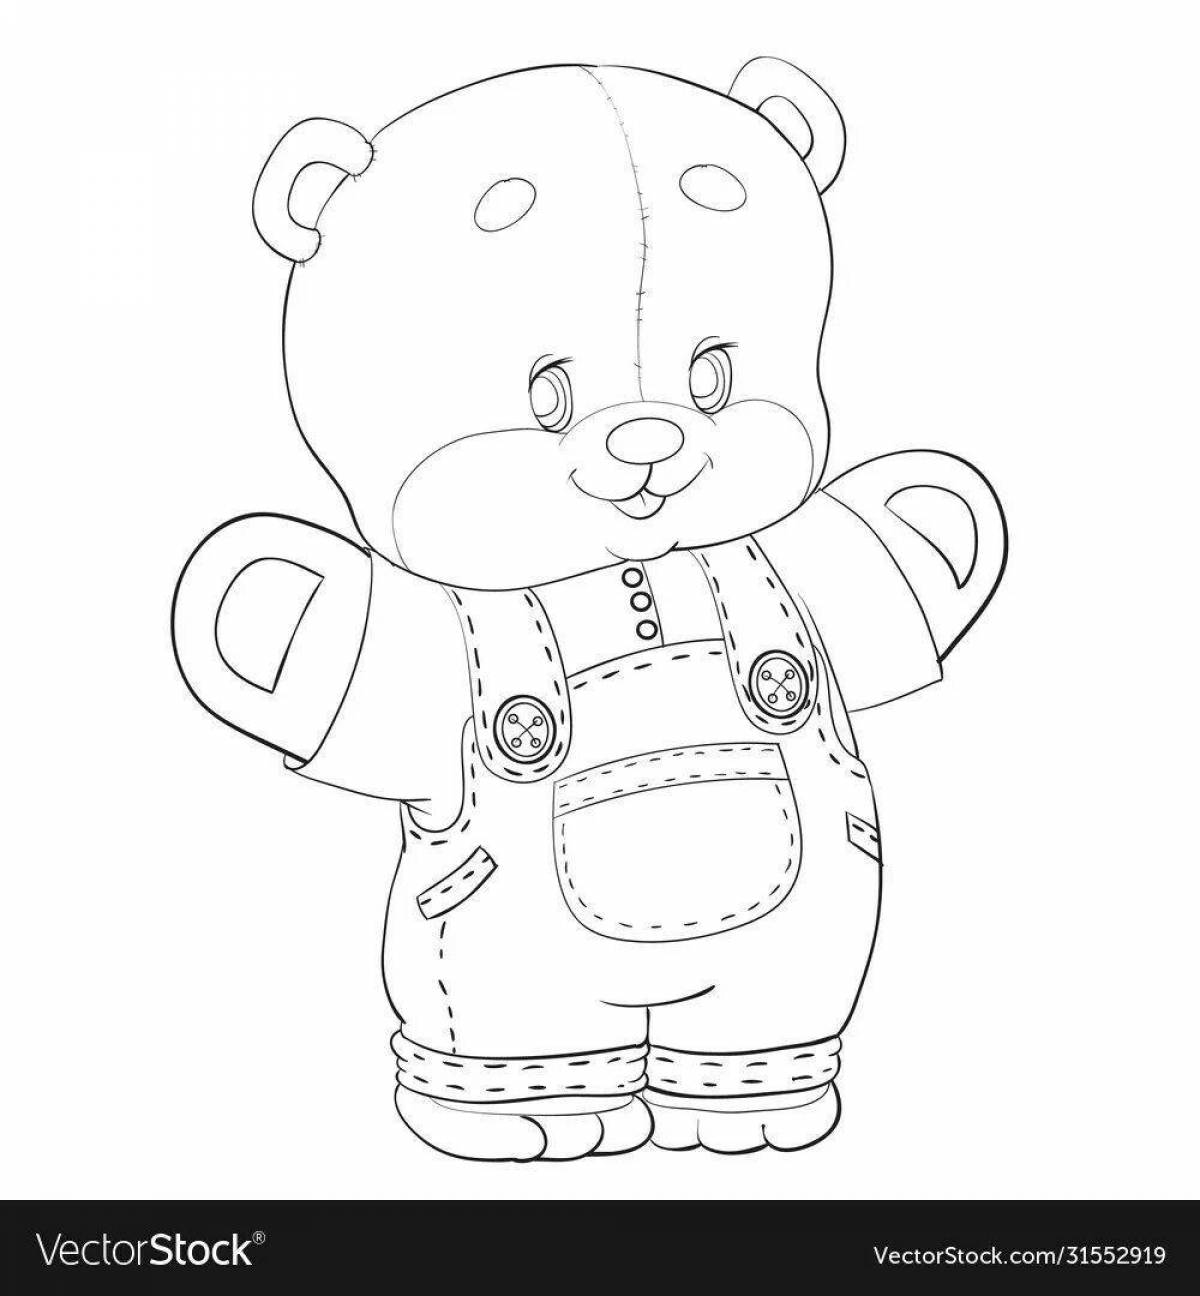 Joyful as can be teddy bear in baby pants coloring book